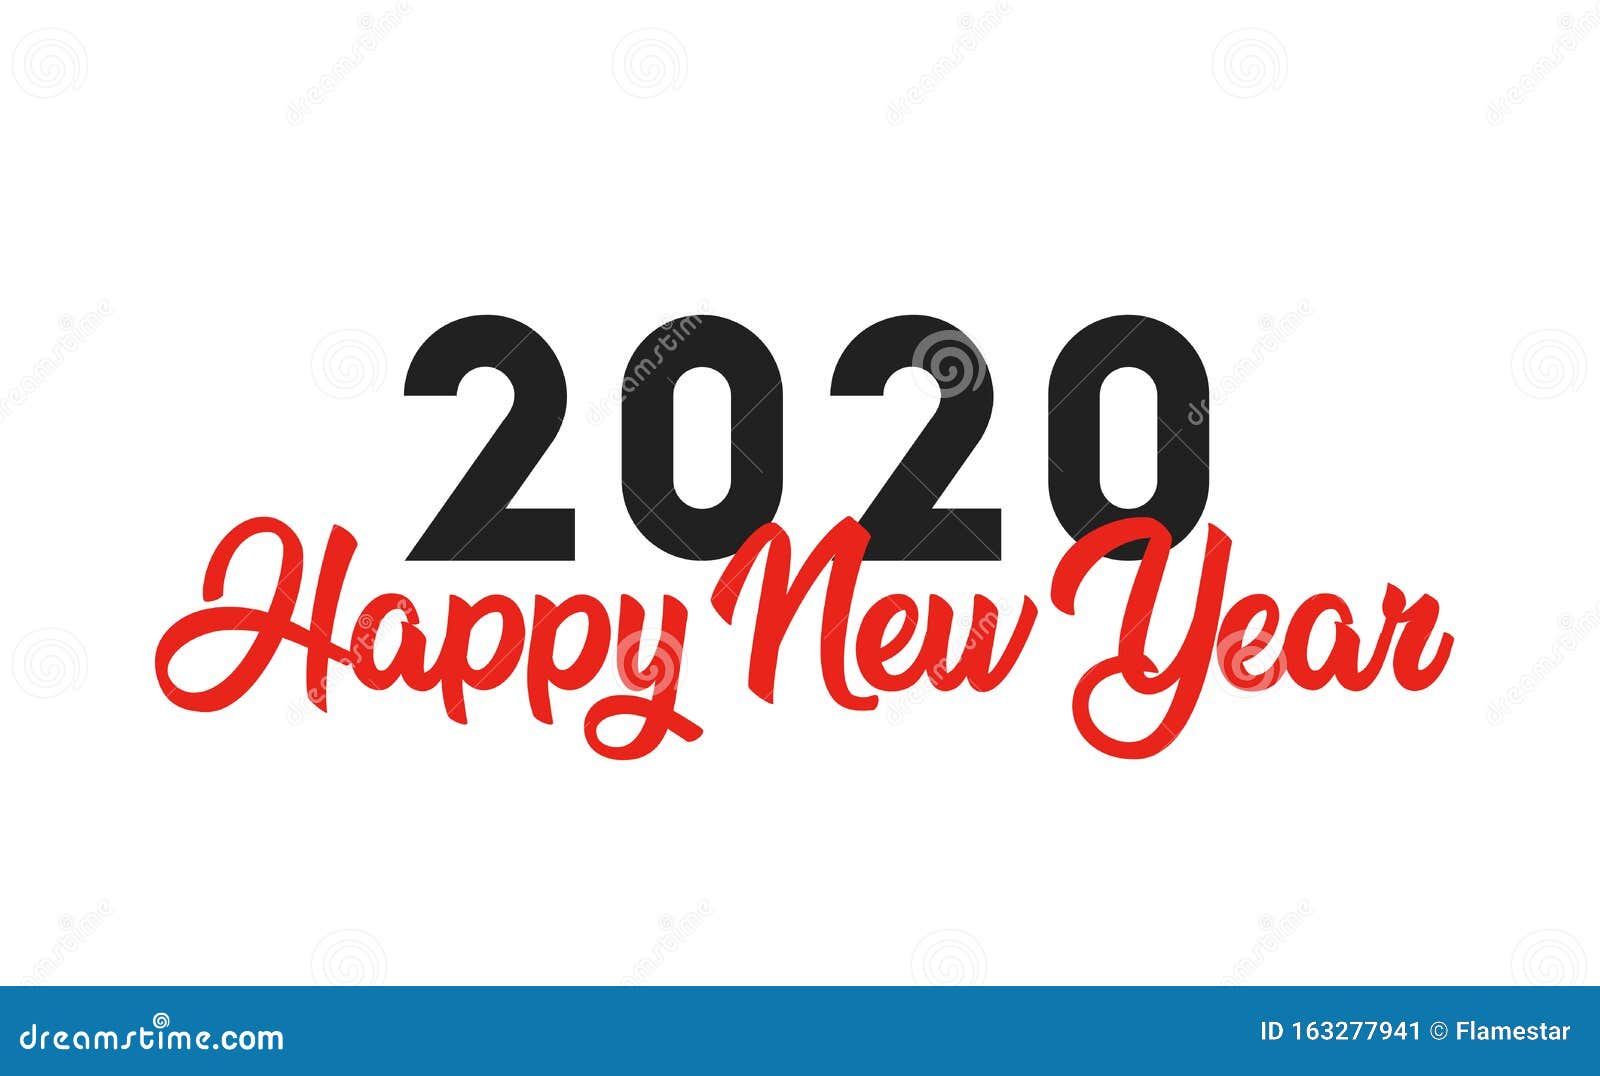 Happy New Year 2020 Logo Design Broschure Design Vorlage Karte Banner Vector Illustration Vektor Abbildung Illustration Von Karte Vorlage 163277941